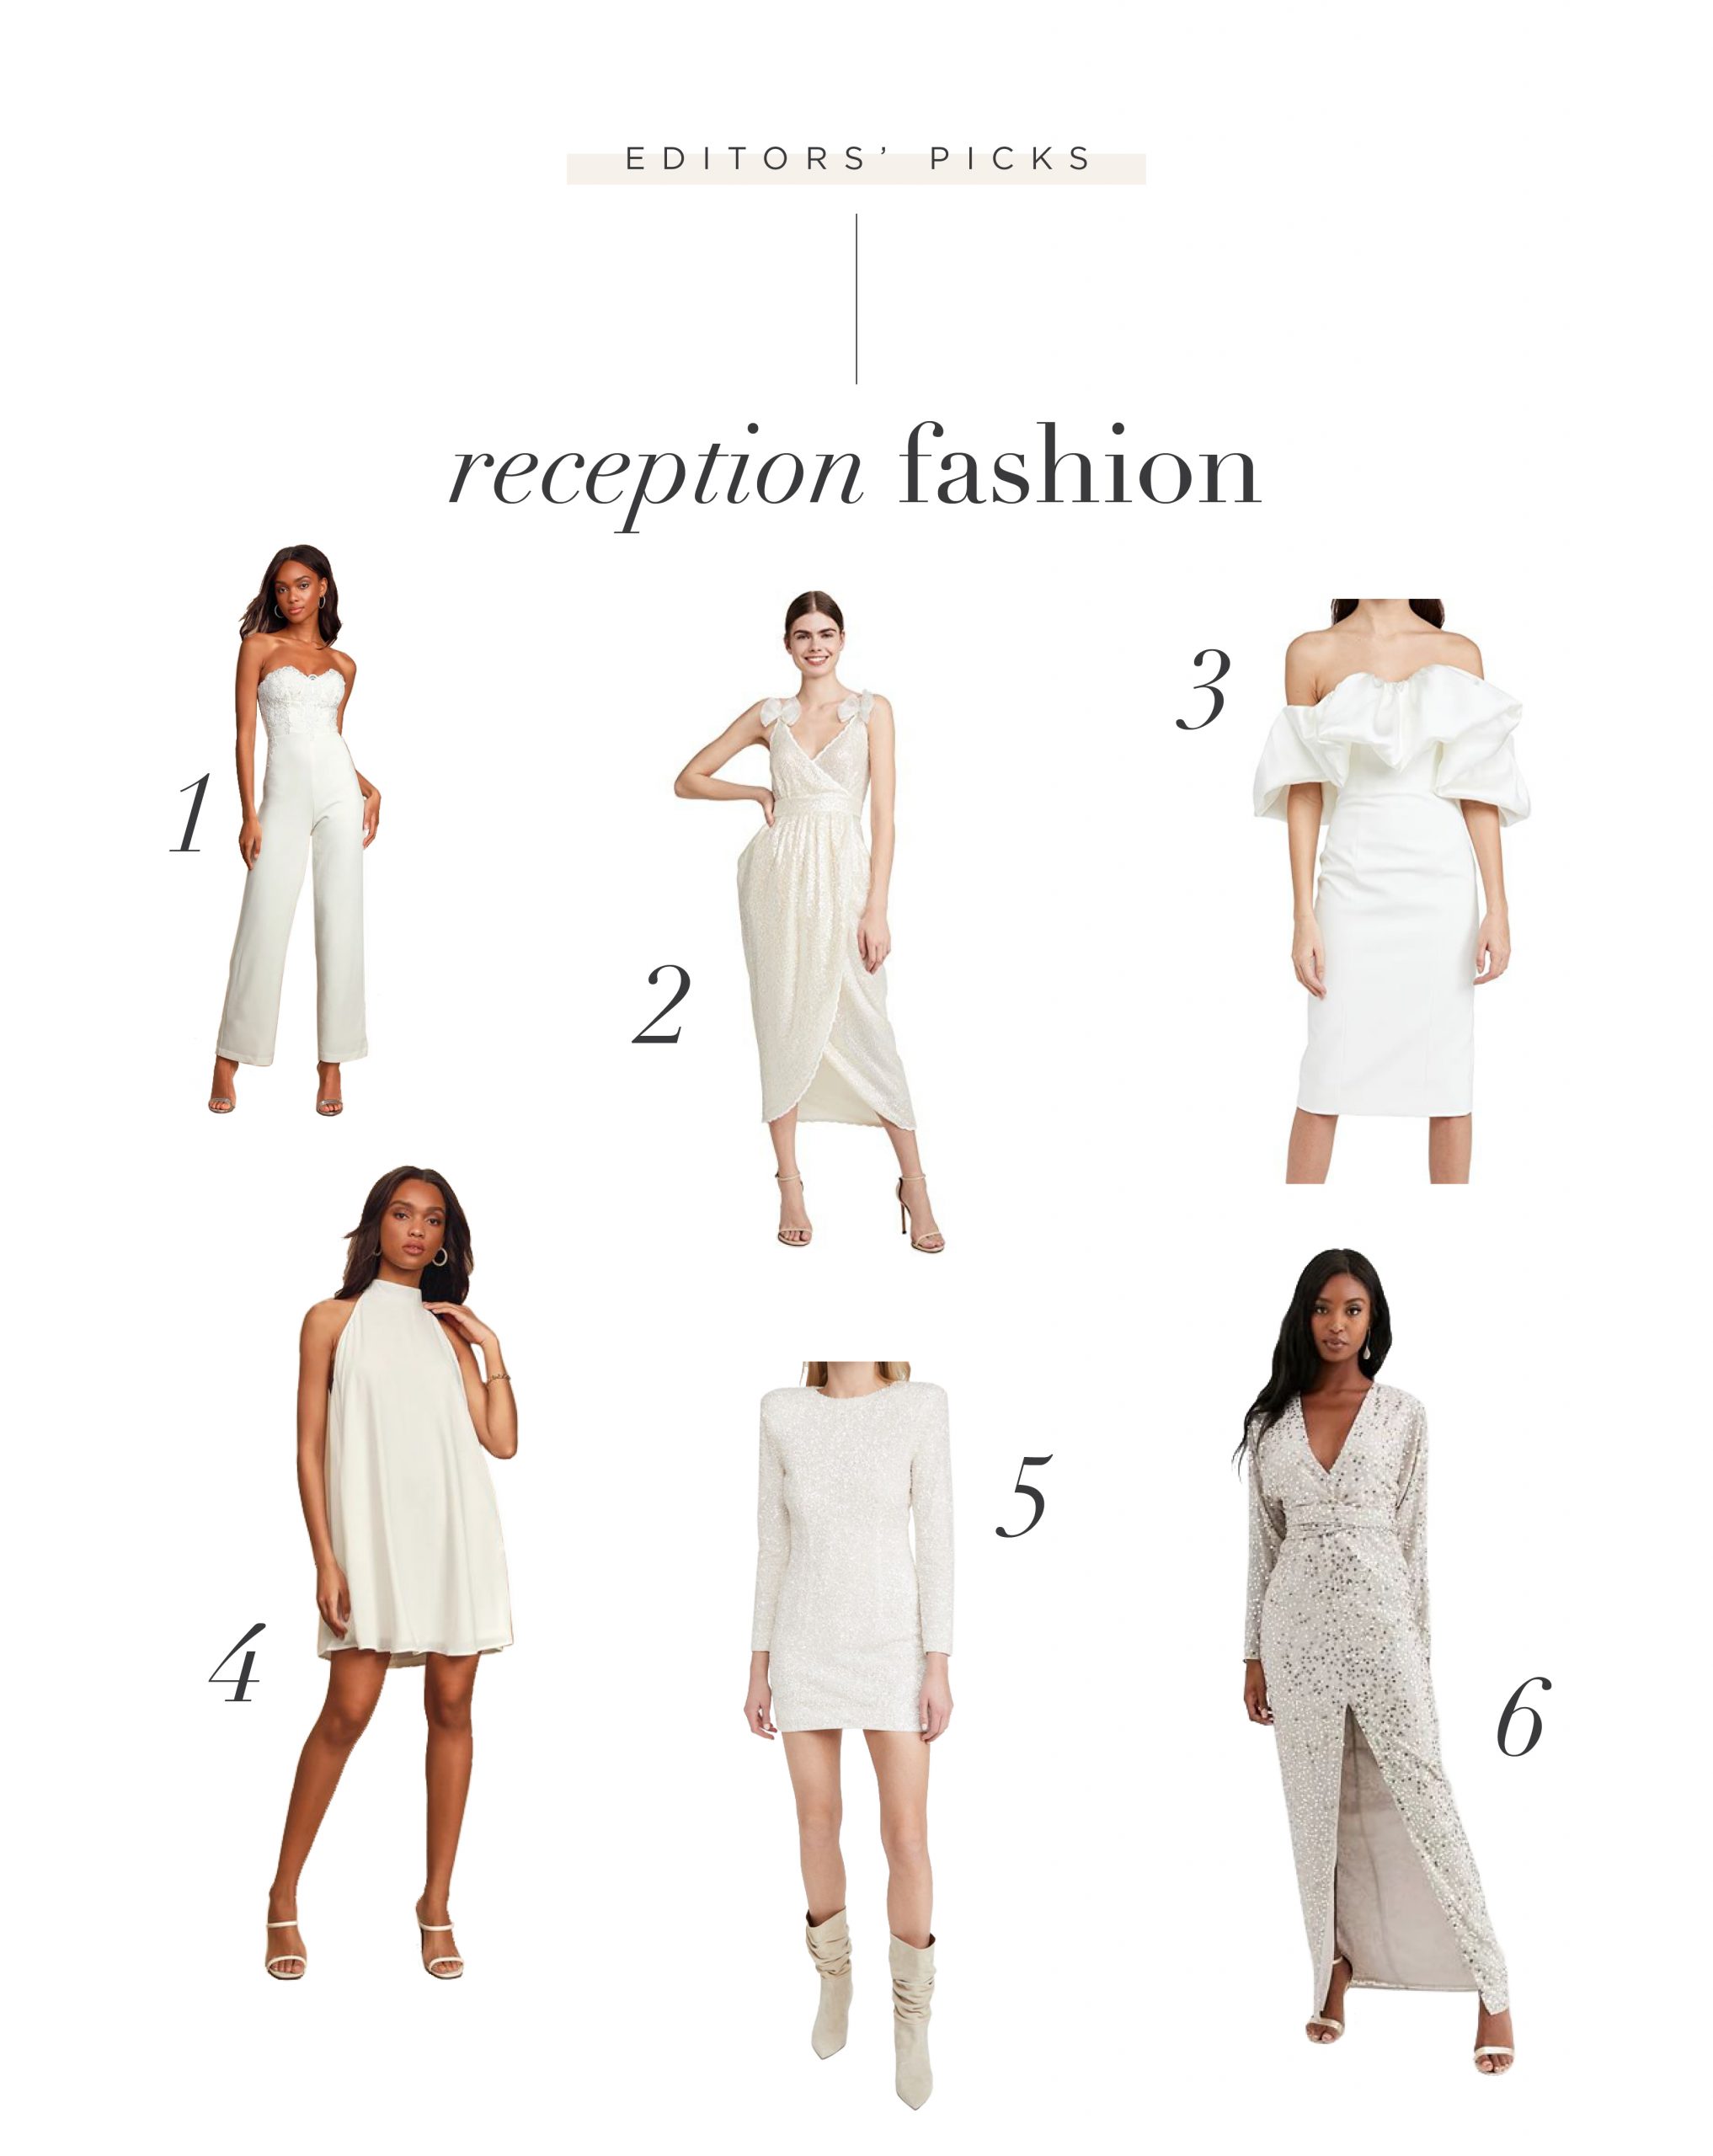 Choosing the Perfect Wedding Reception Fashion + Exit Attire